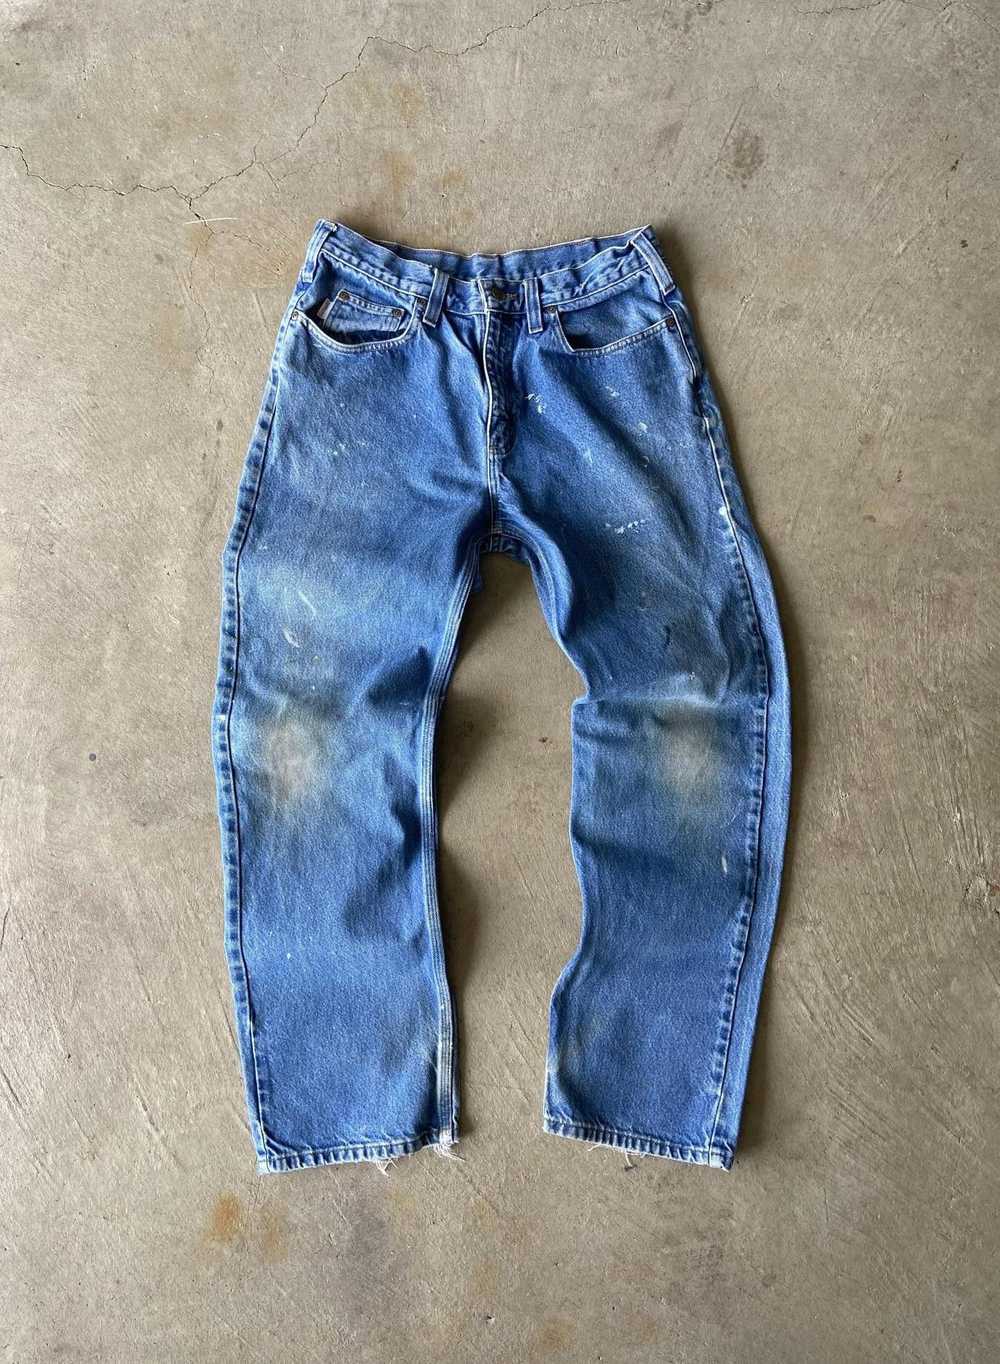 Carhartt Carhartt Thrashed Painter's Blue Jeans - image 1